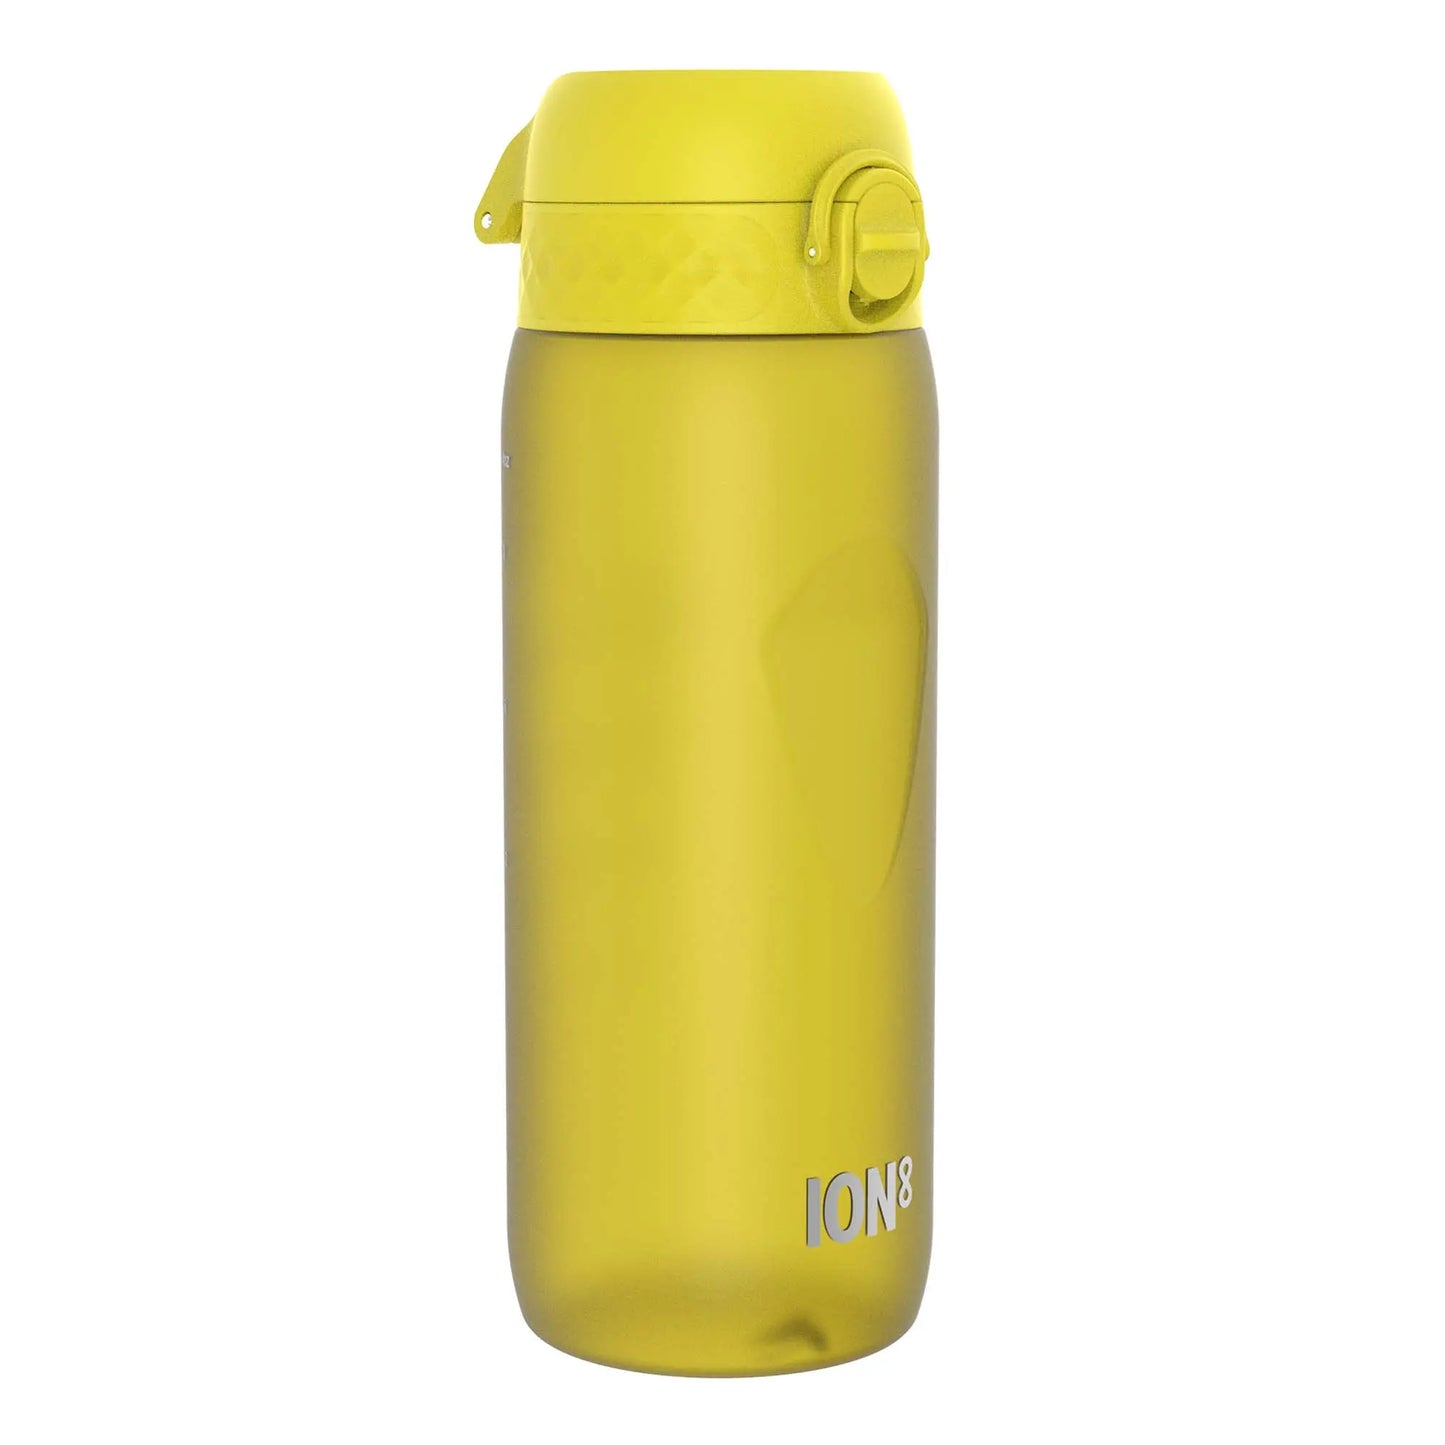 Leak Proof Water Bottle, Recyclon™, Yellow, 750ml (24oz) Ion8